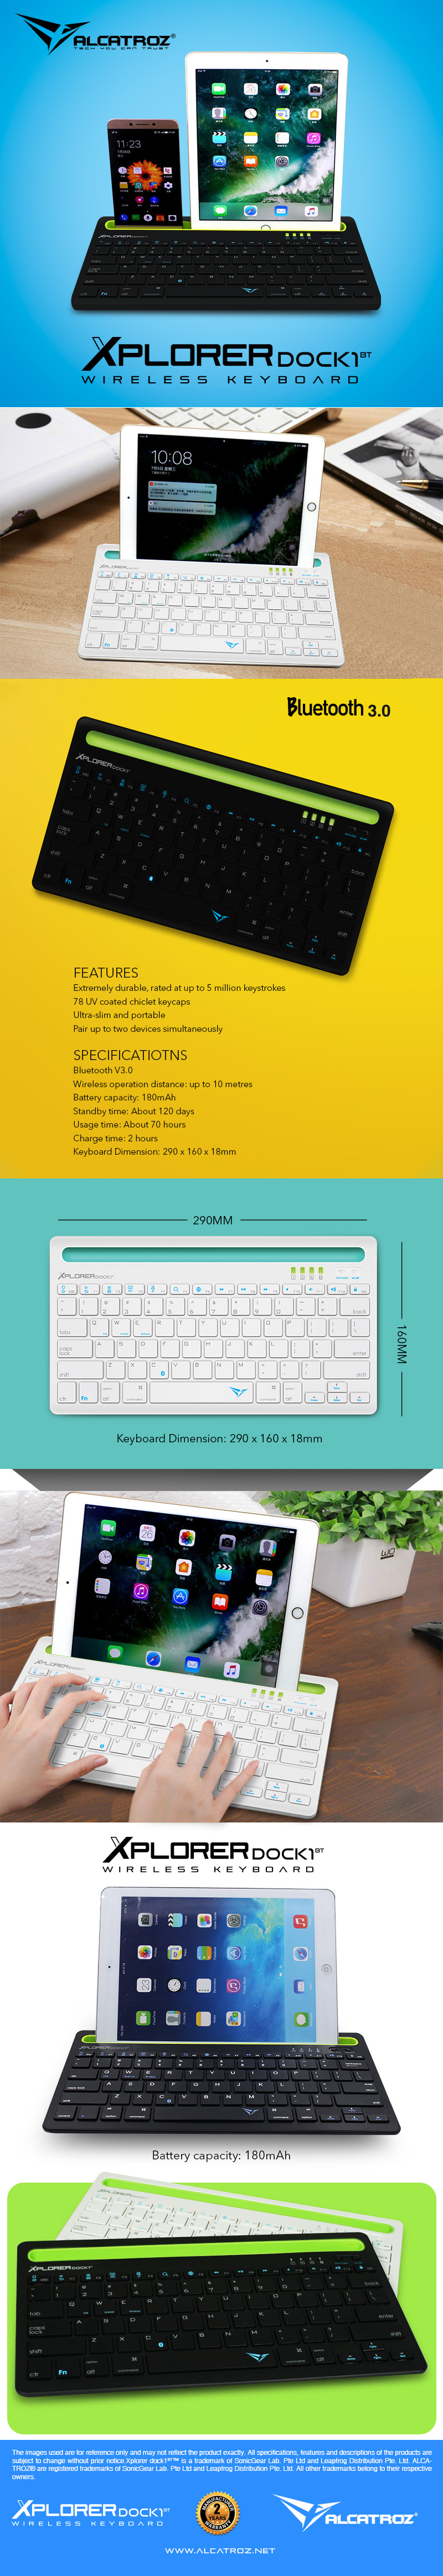 Keyboards-Alcatroz-Xplorer-Dock-1-Bluetooth-Docking-Keyboard-White-Turquoise-2